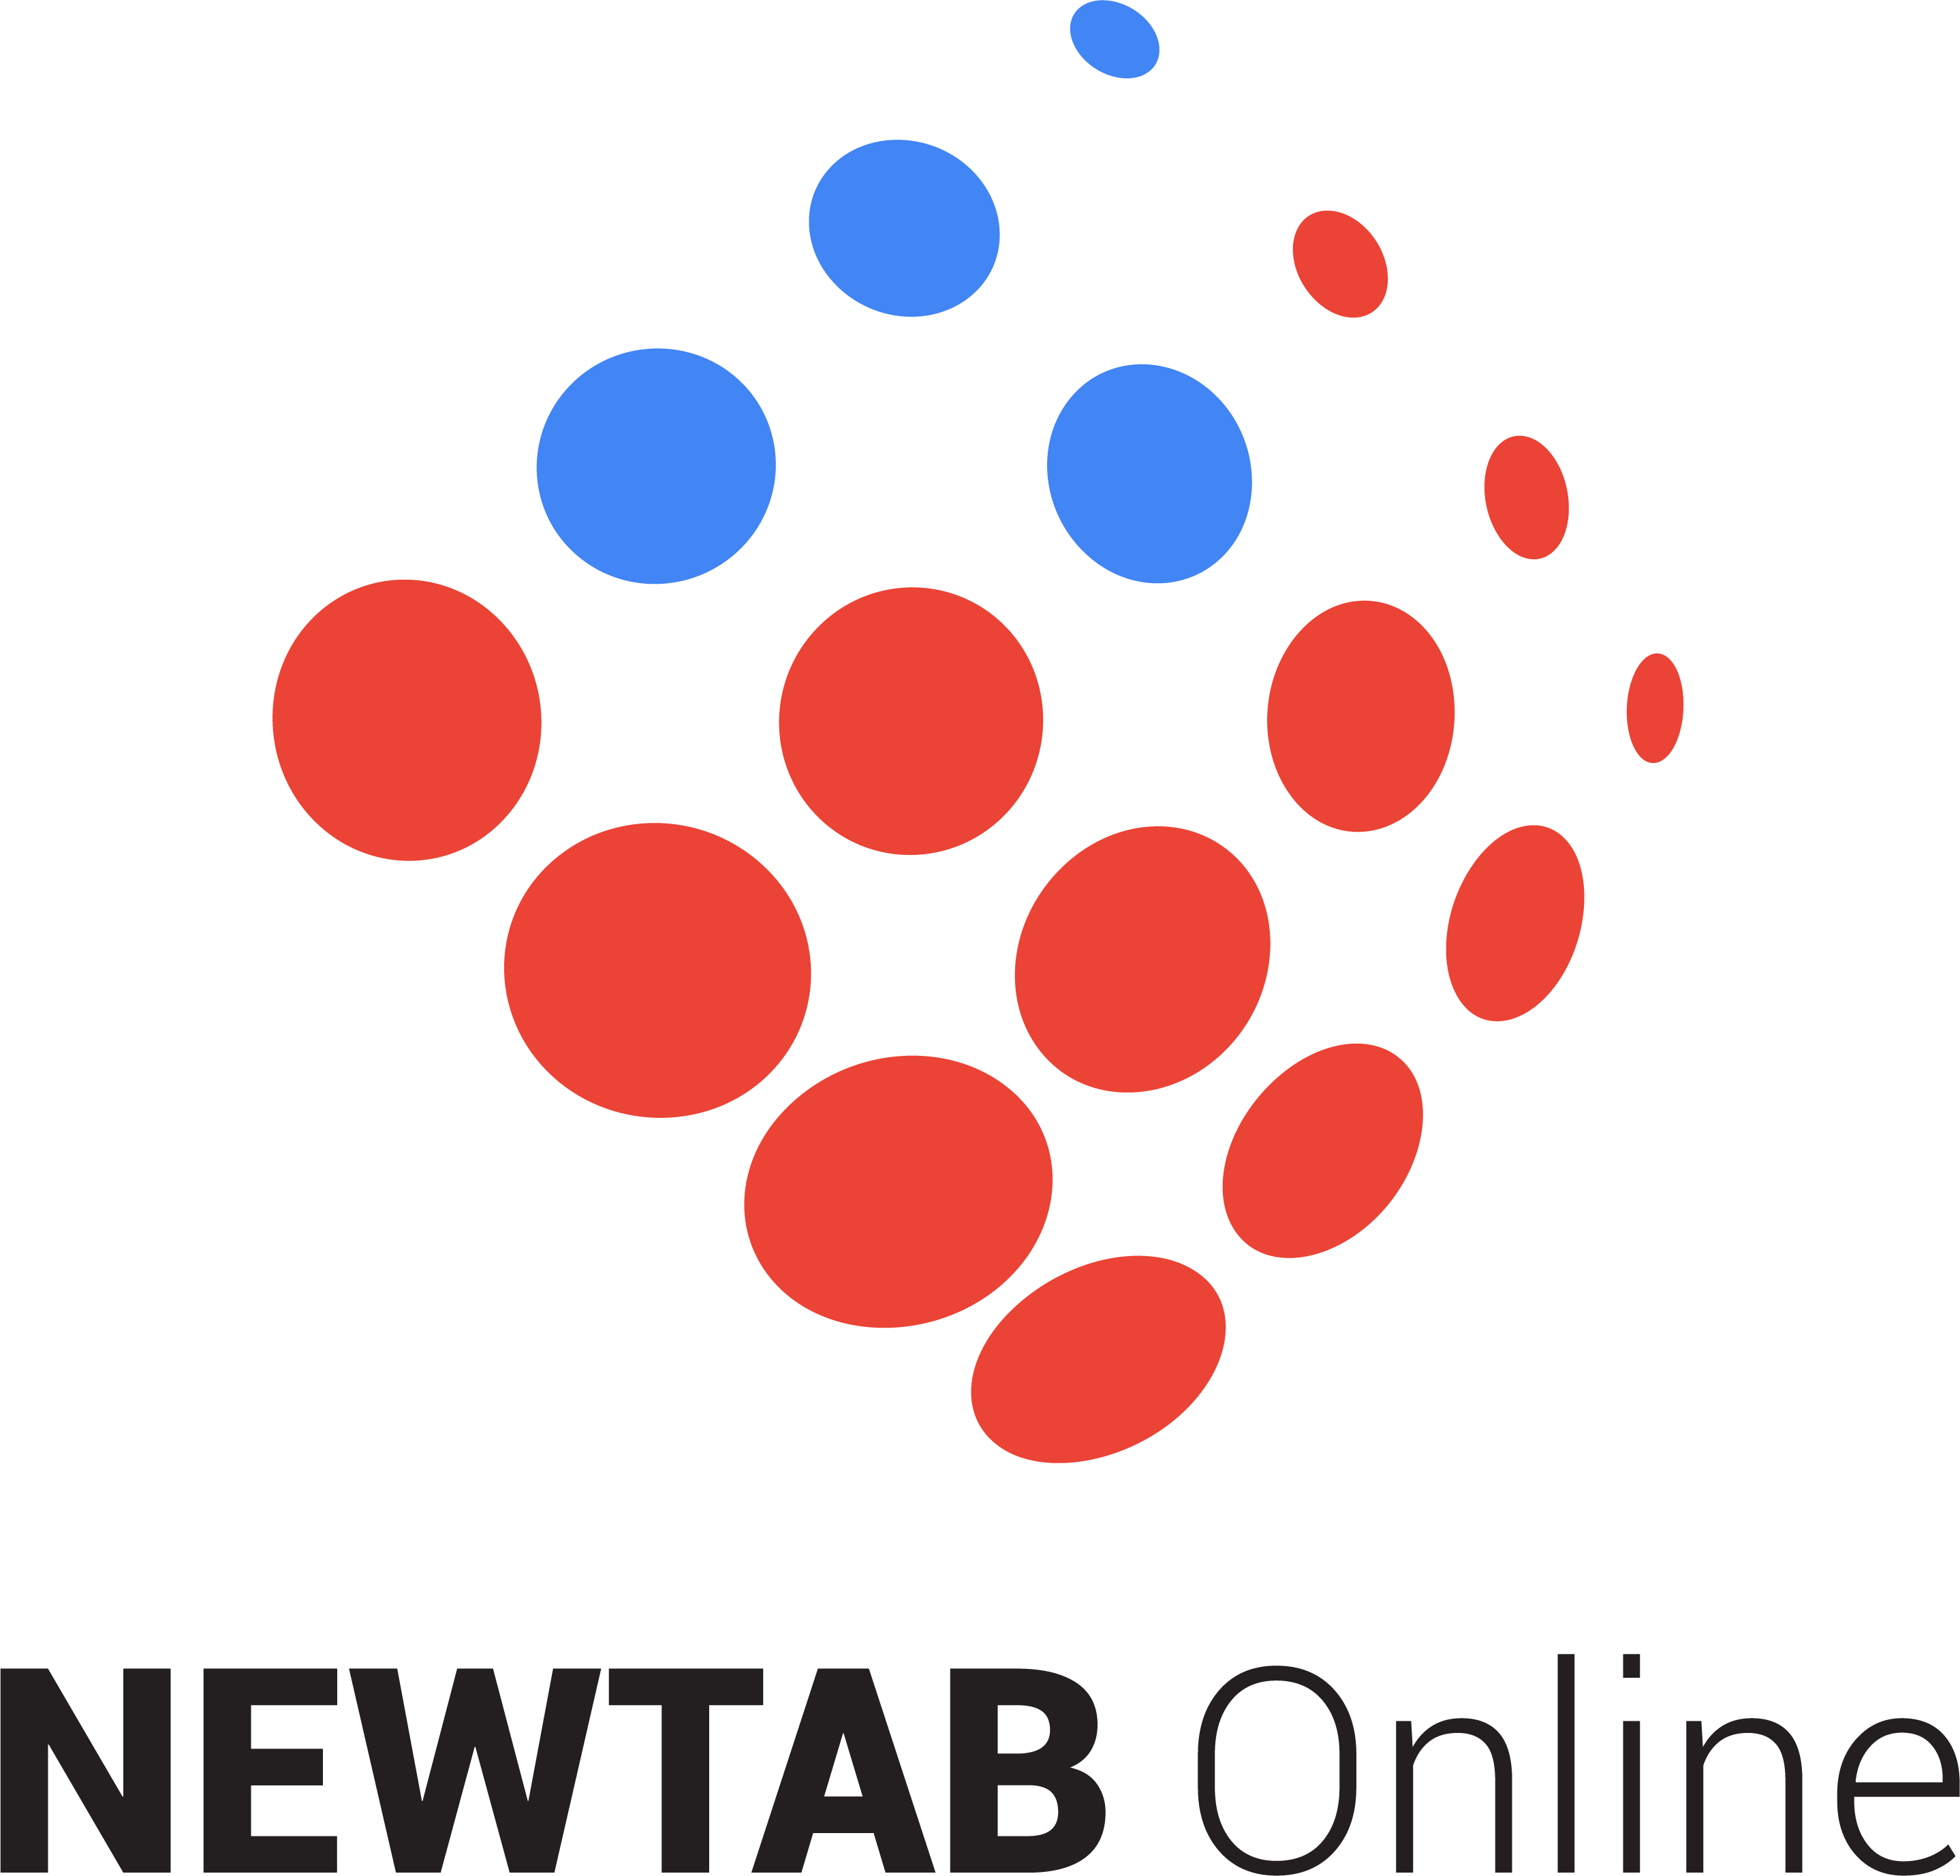 Newtab Online